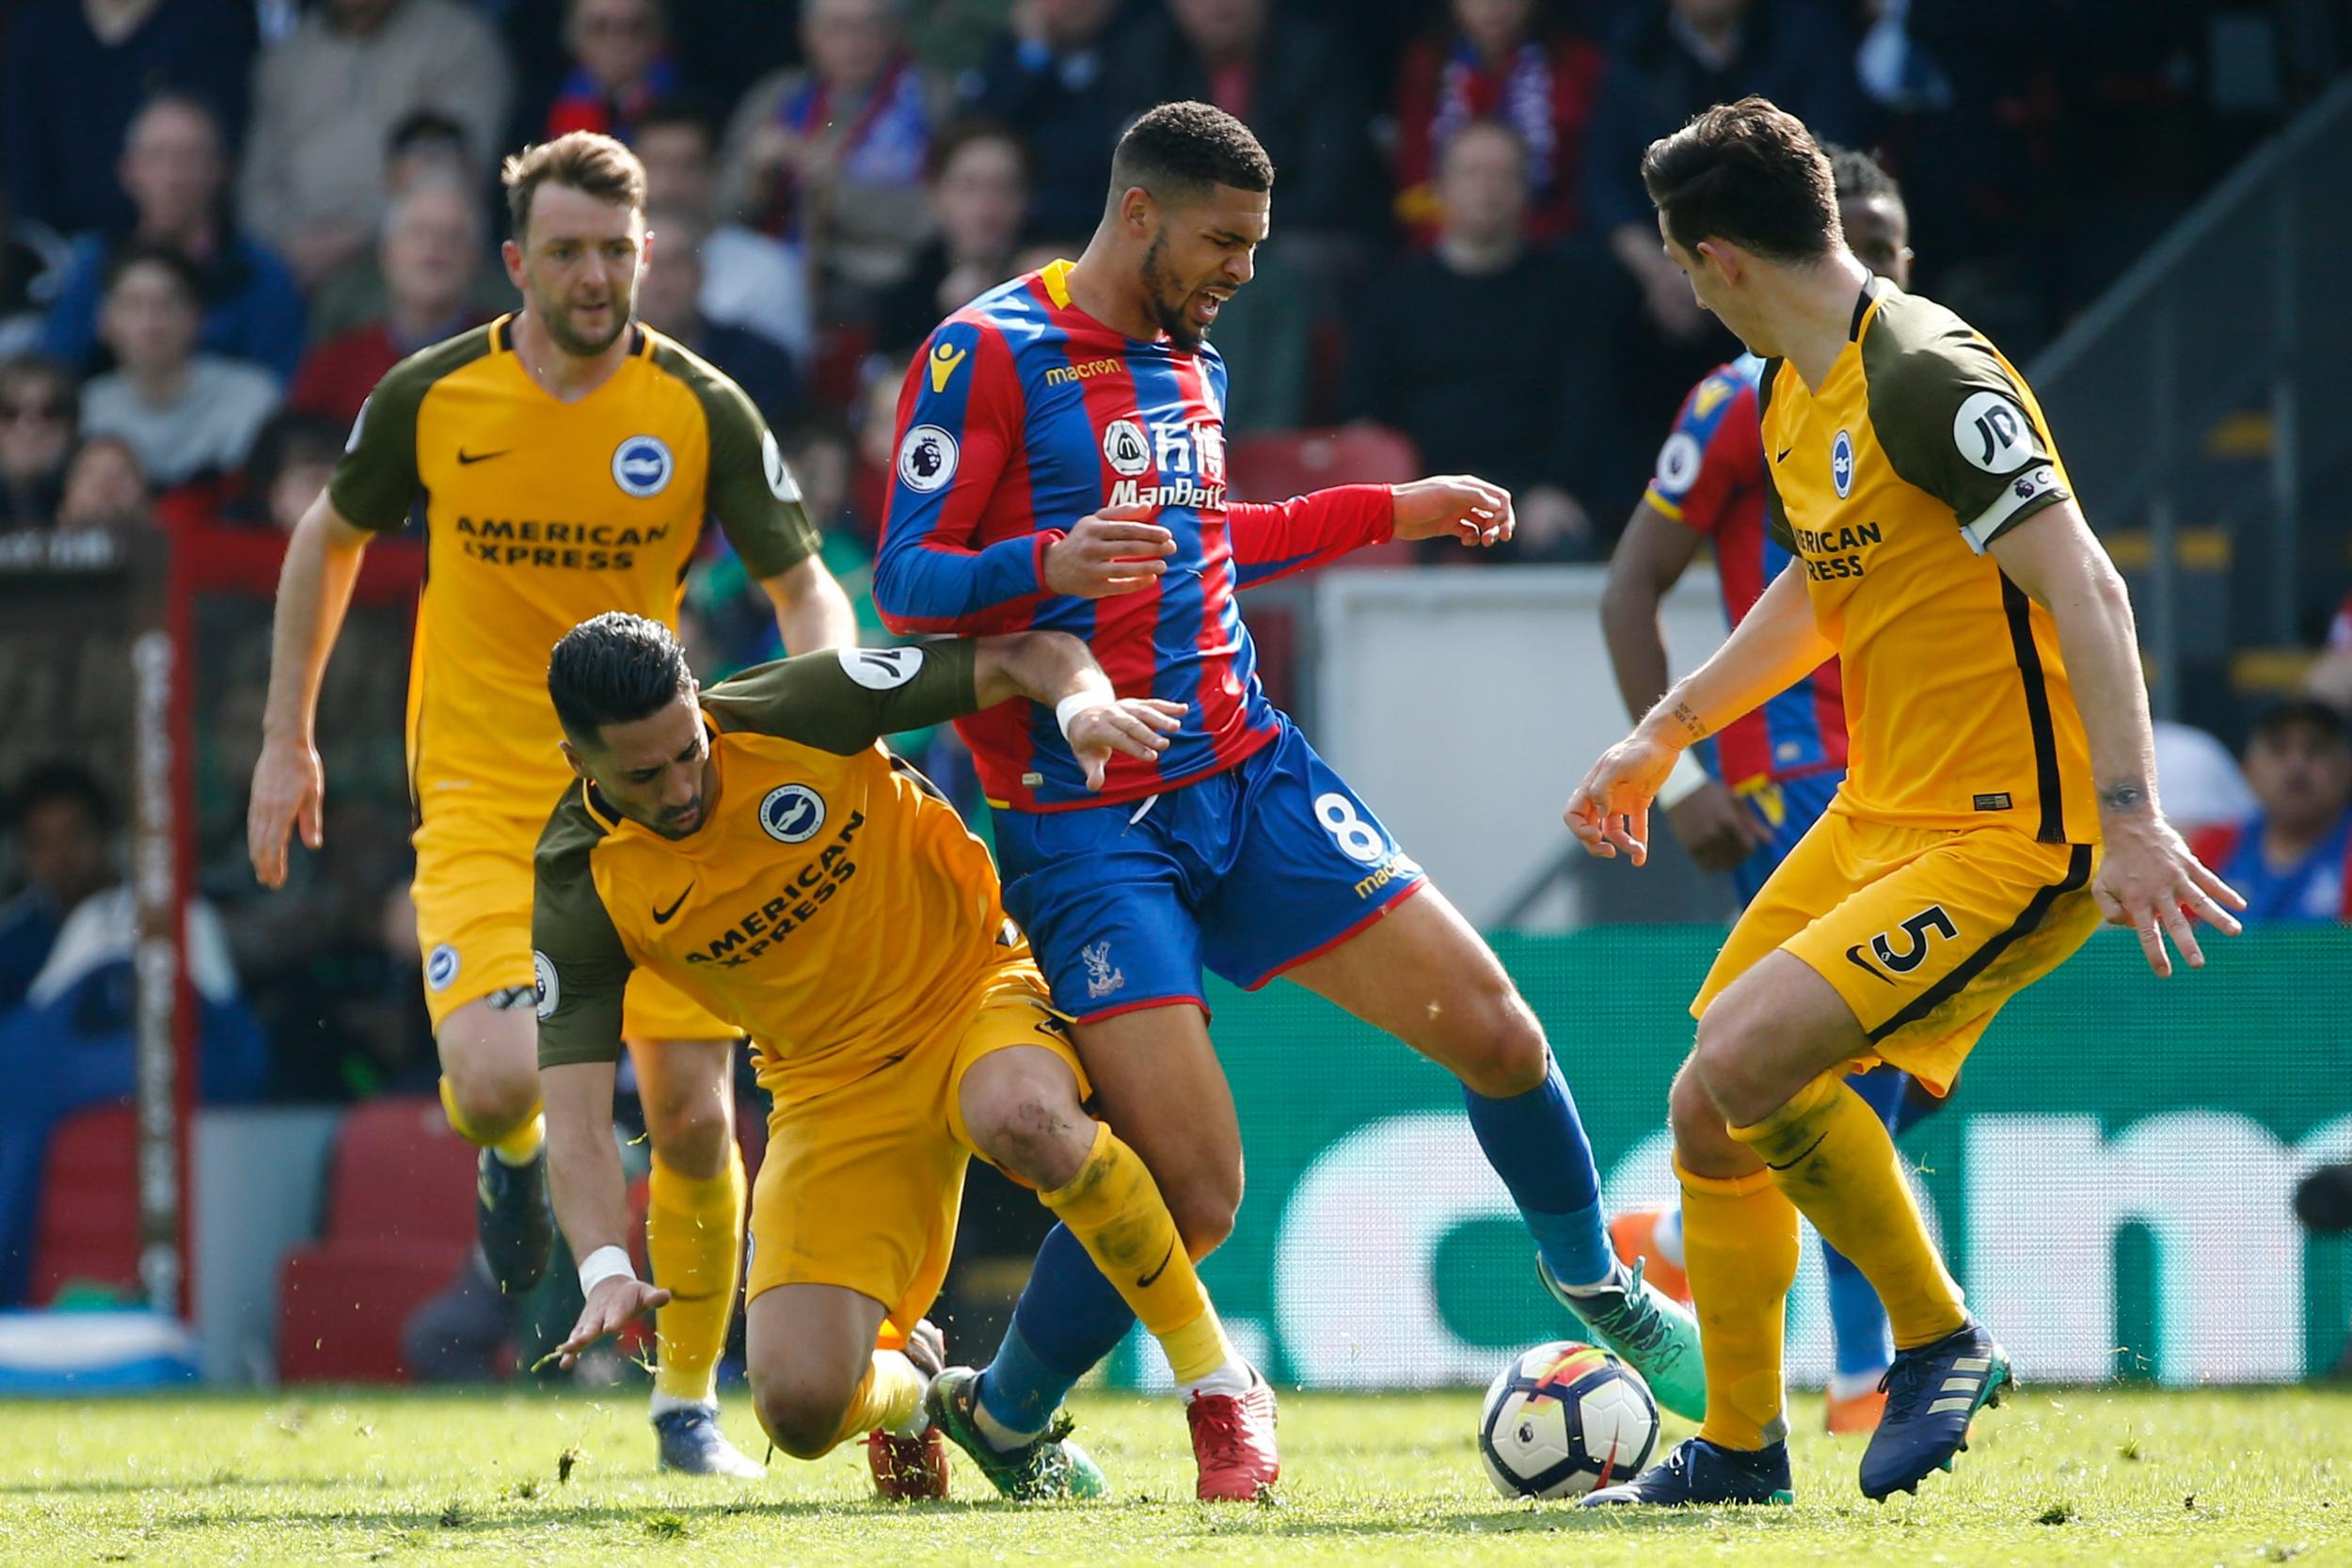 Brighton’s midfield struggled to contain Ruben Loftus-Cheek